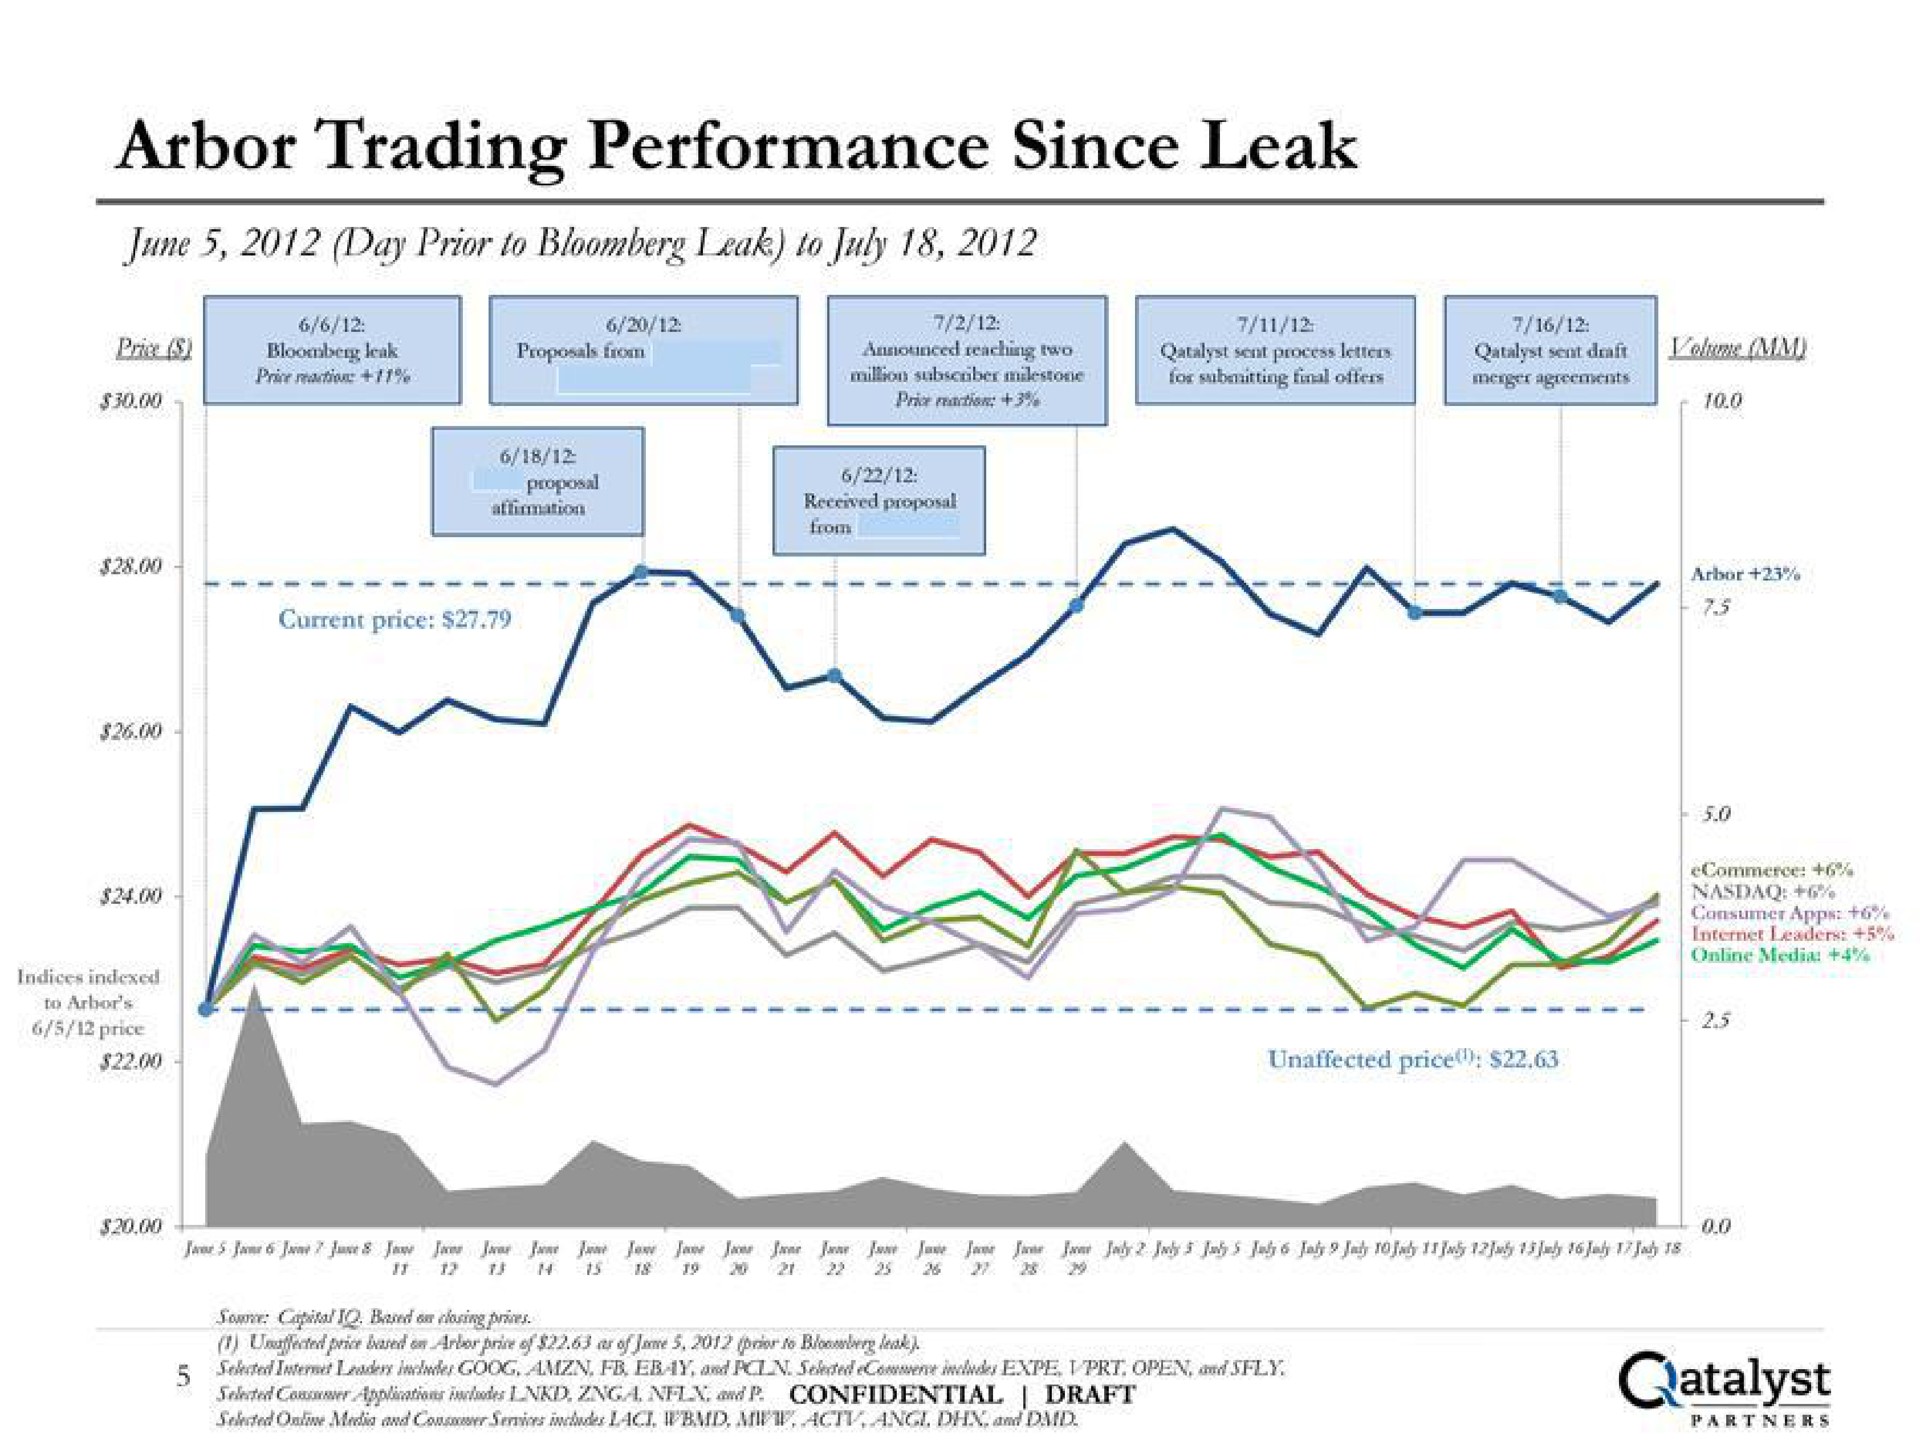 arbor trading performance since leak | Qatalyst Partners